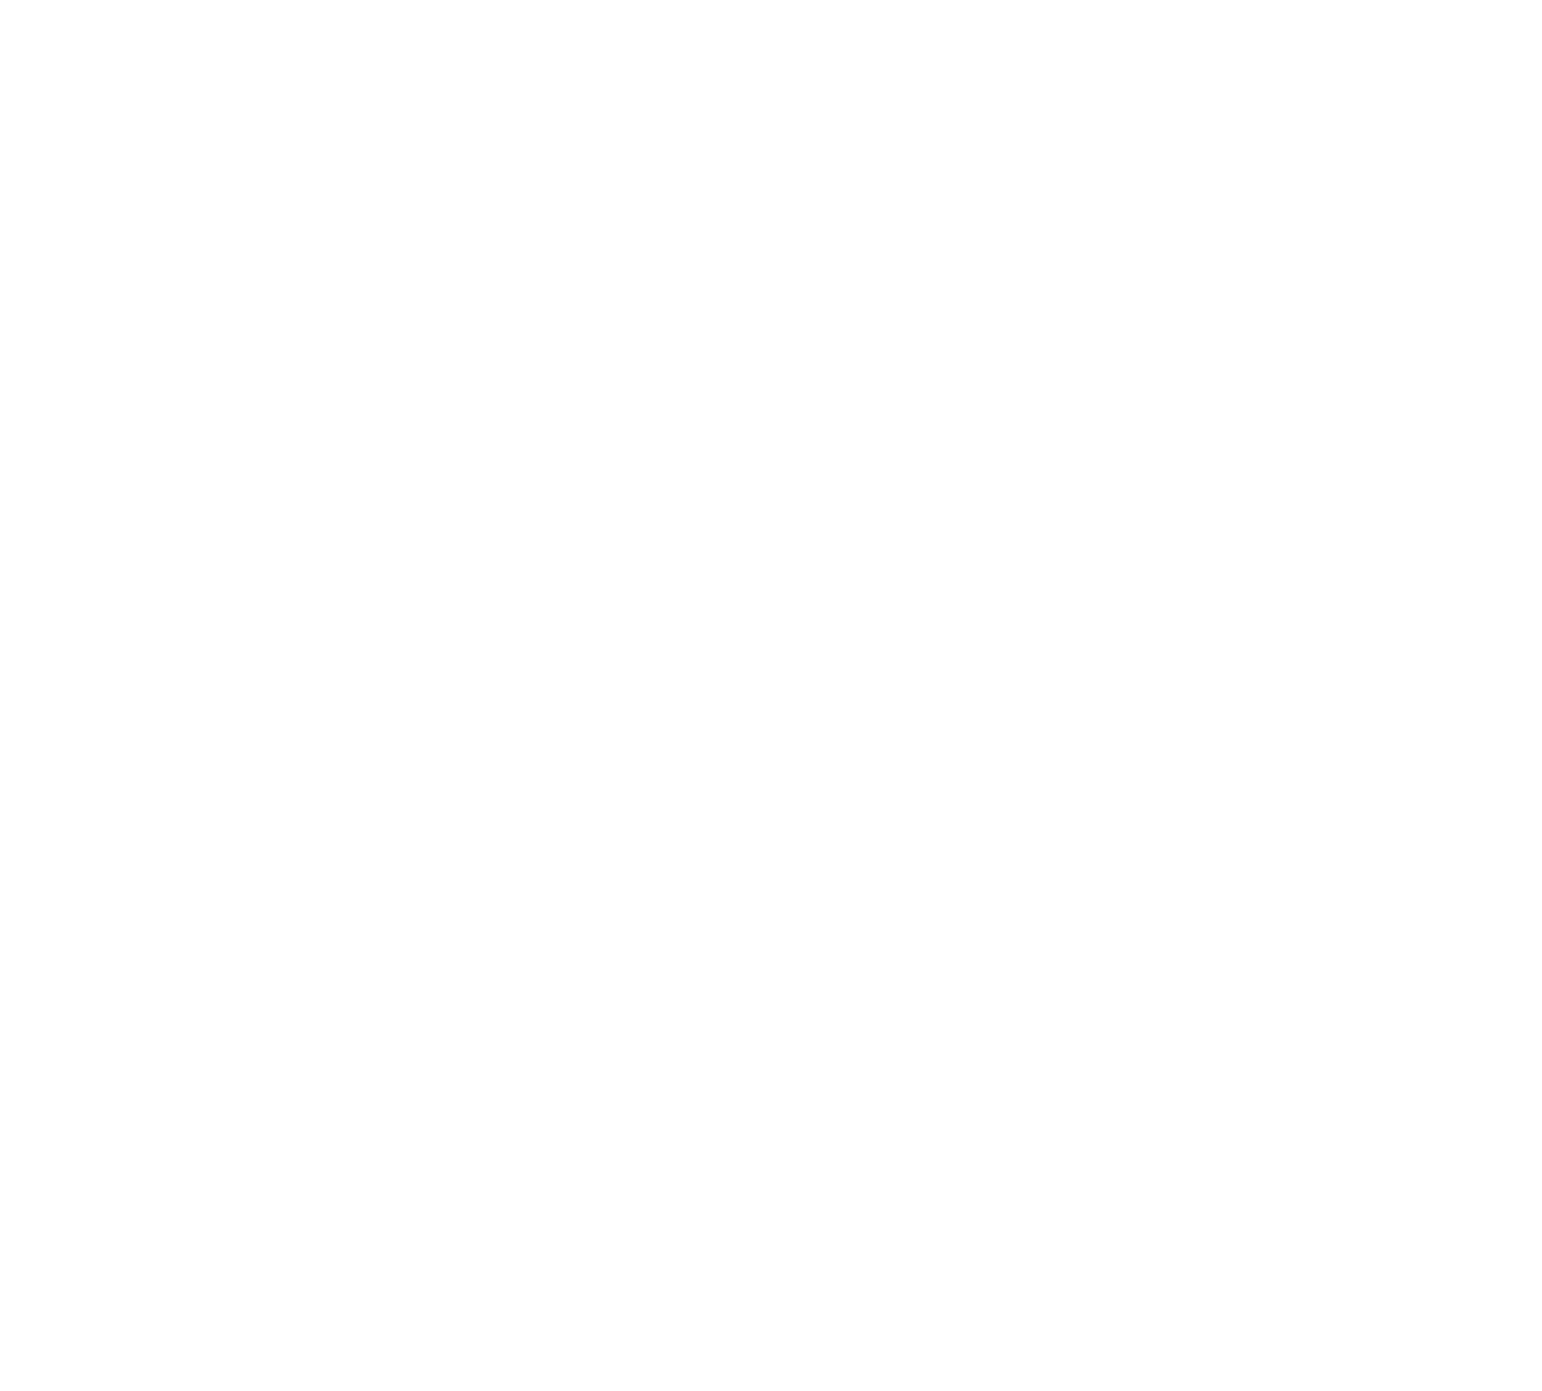 Emirates Driving Company logo pour fonds sombres (PNG transparent)